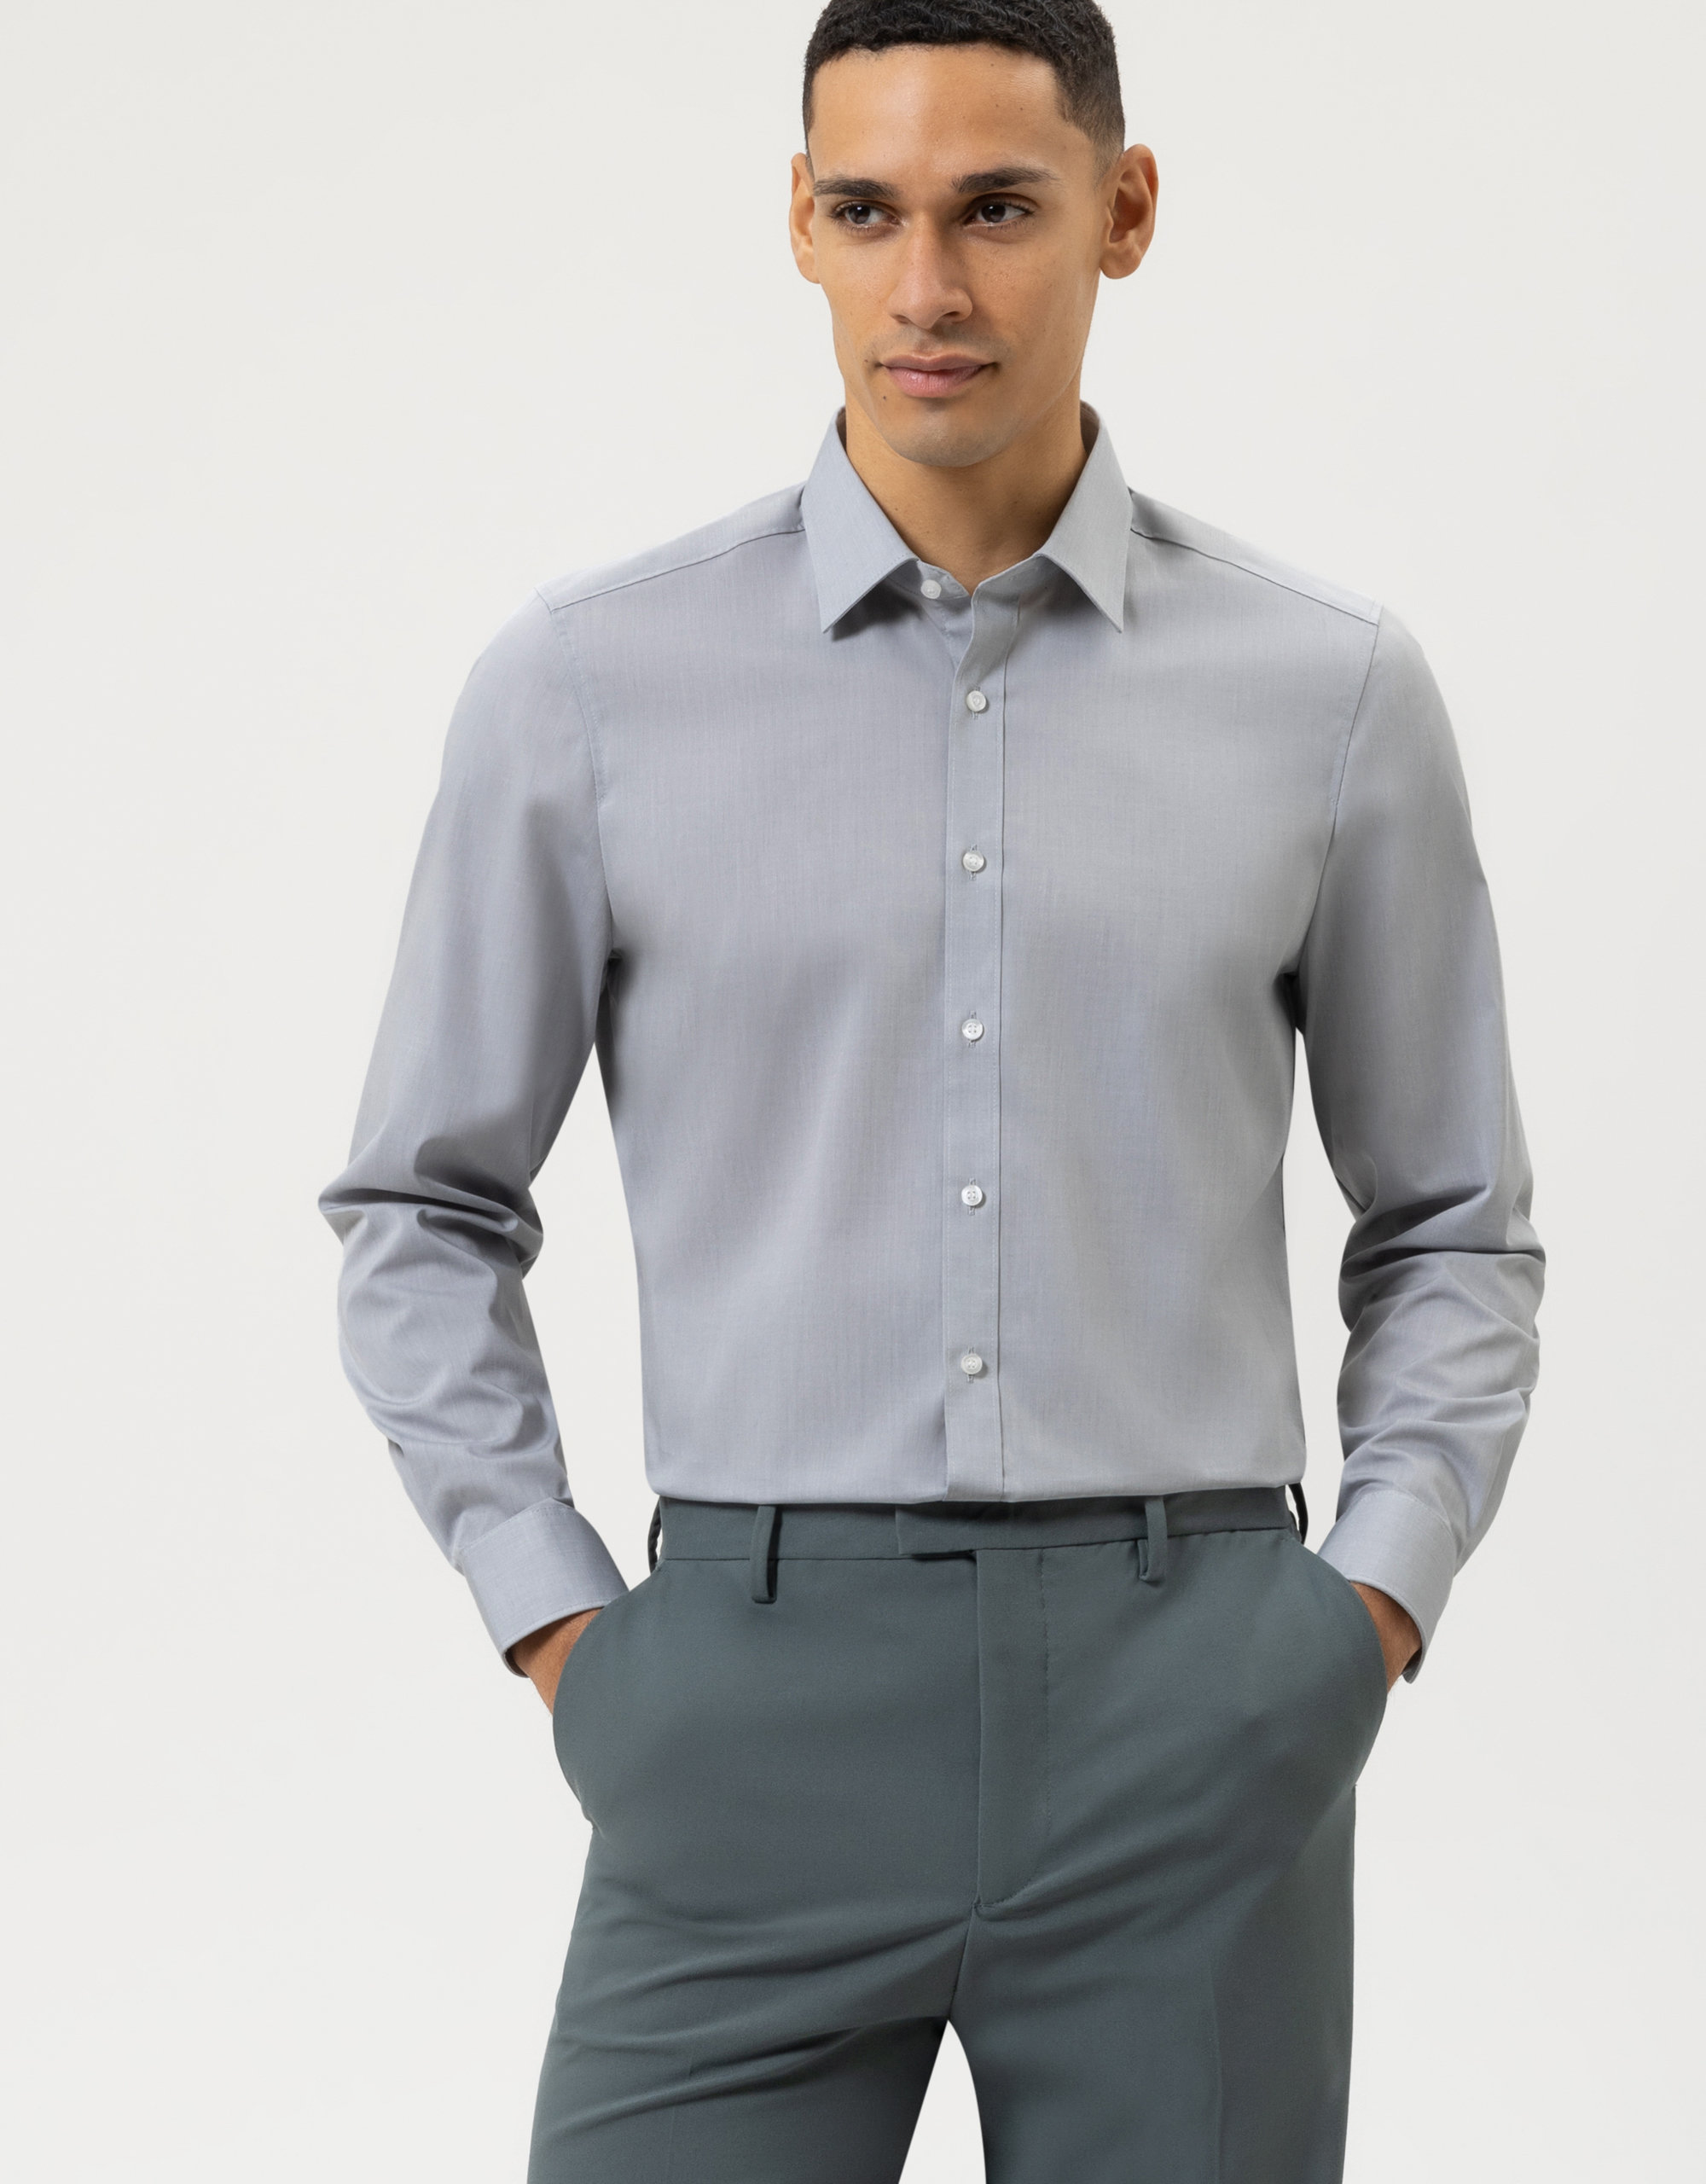 Kent fit, OLYMP | Business New body Five, Medium Grey 20806460 York - shirt Level |